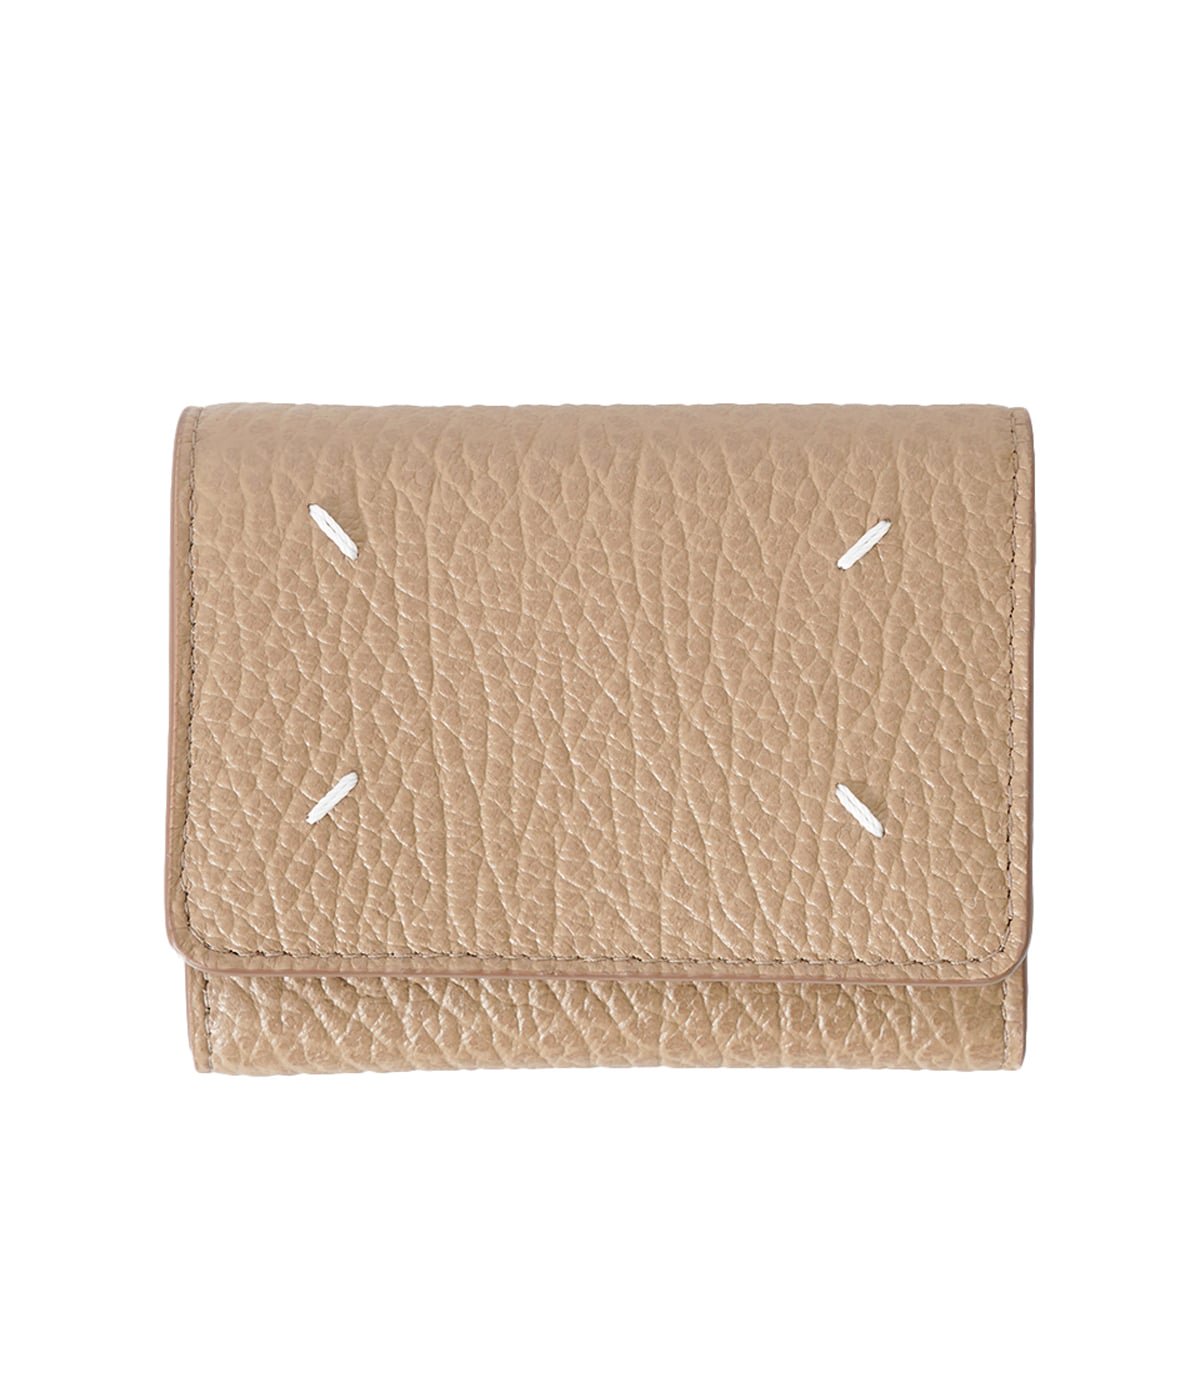 Zip Compact tri fold wallet | Maison Margiela(メゾン マルジェラ